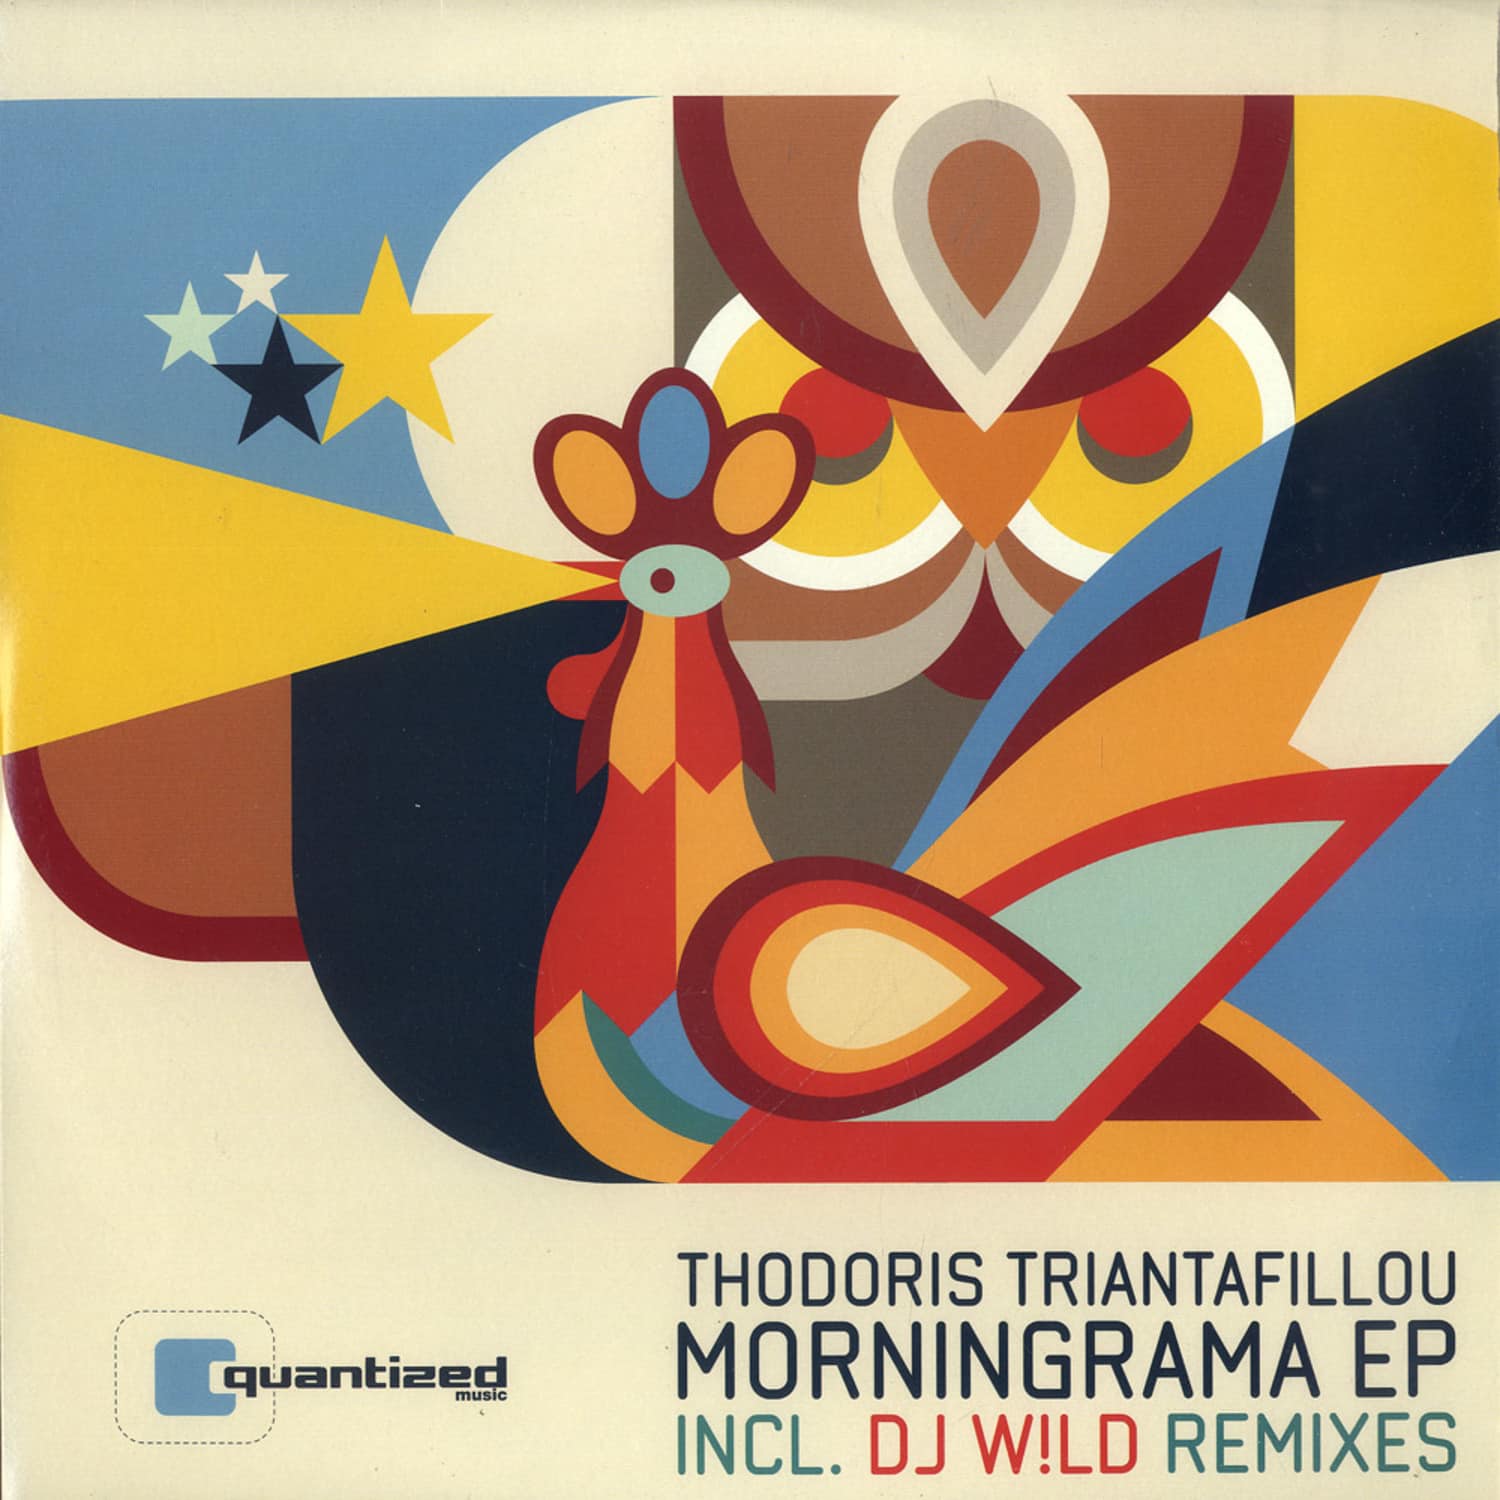 Thodoris Triantafillou - MORNINGRAMA EP 